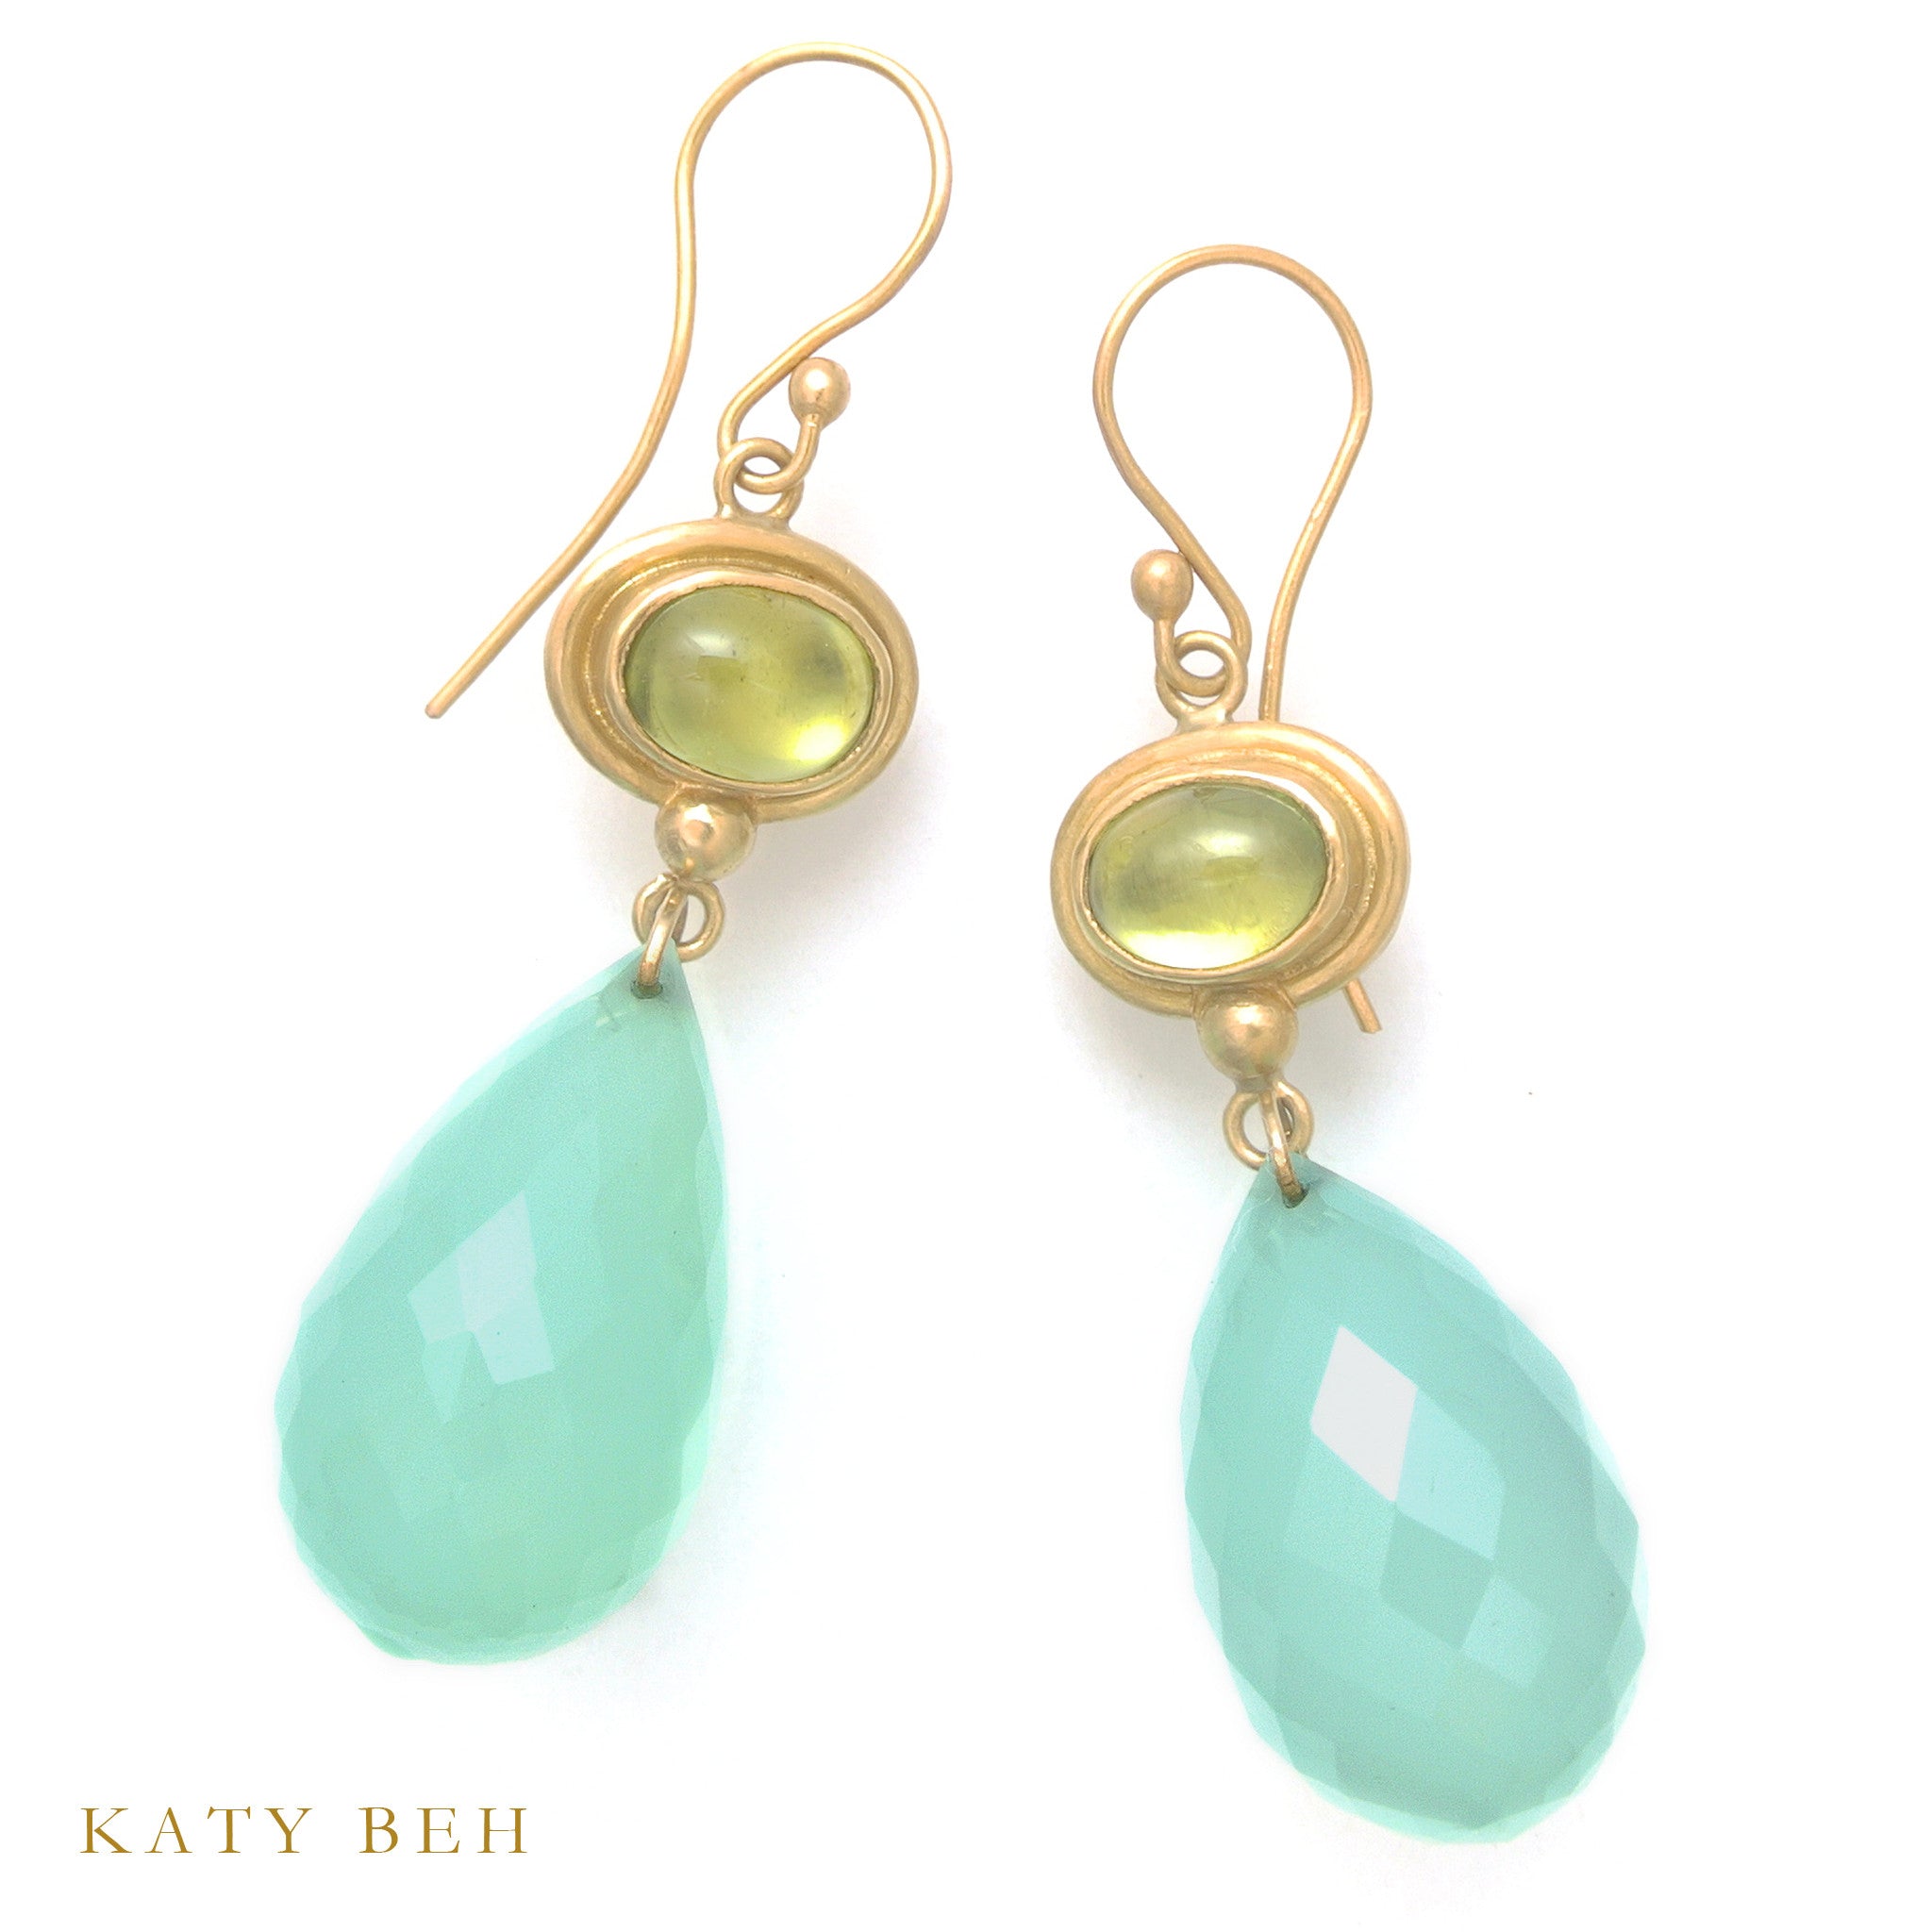 Earrings - Katy Beh 22k Gold Handmade Jewelry New Orleans